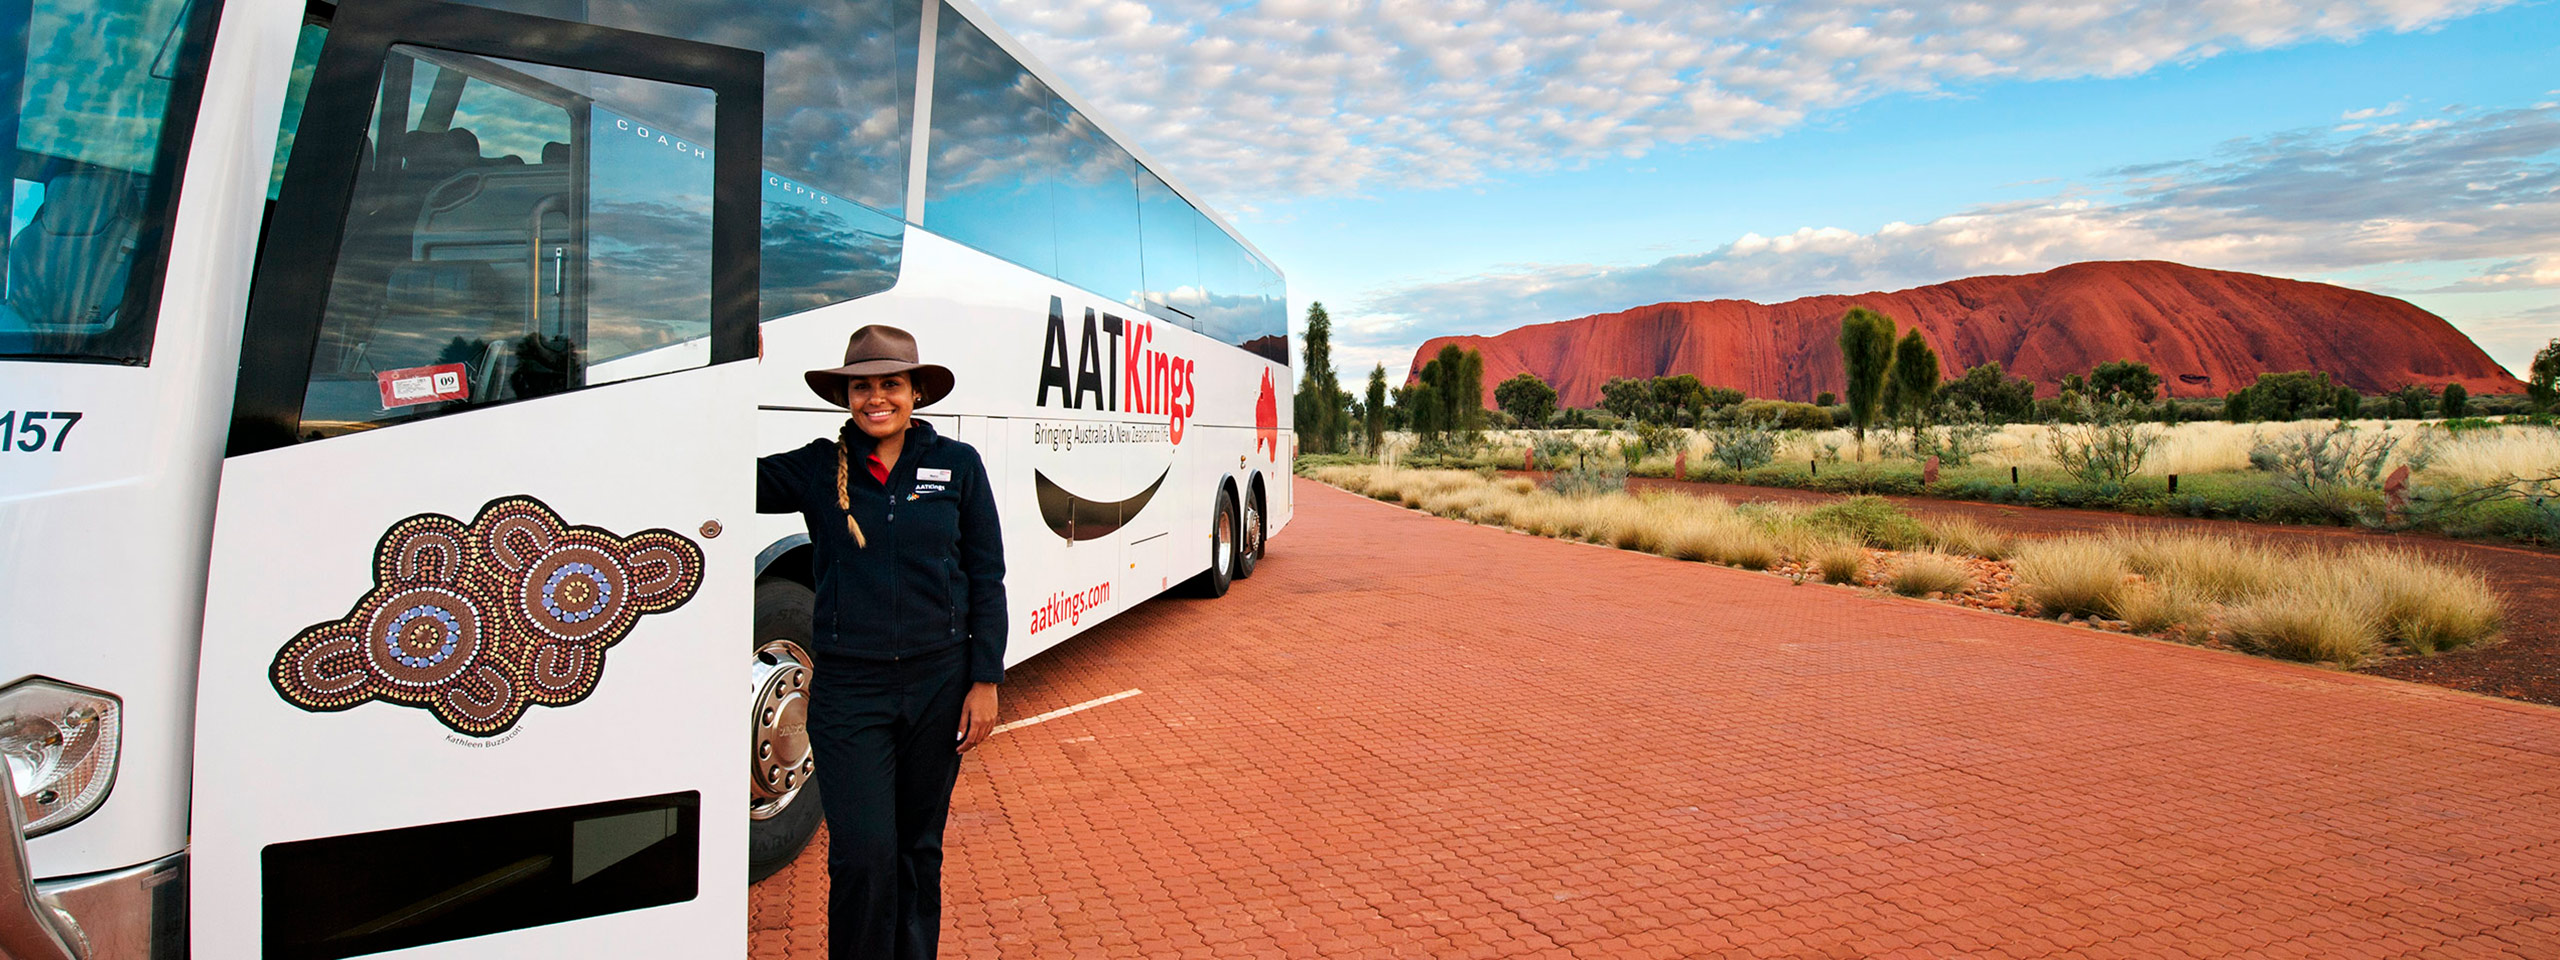 AAT Kings at Uluru